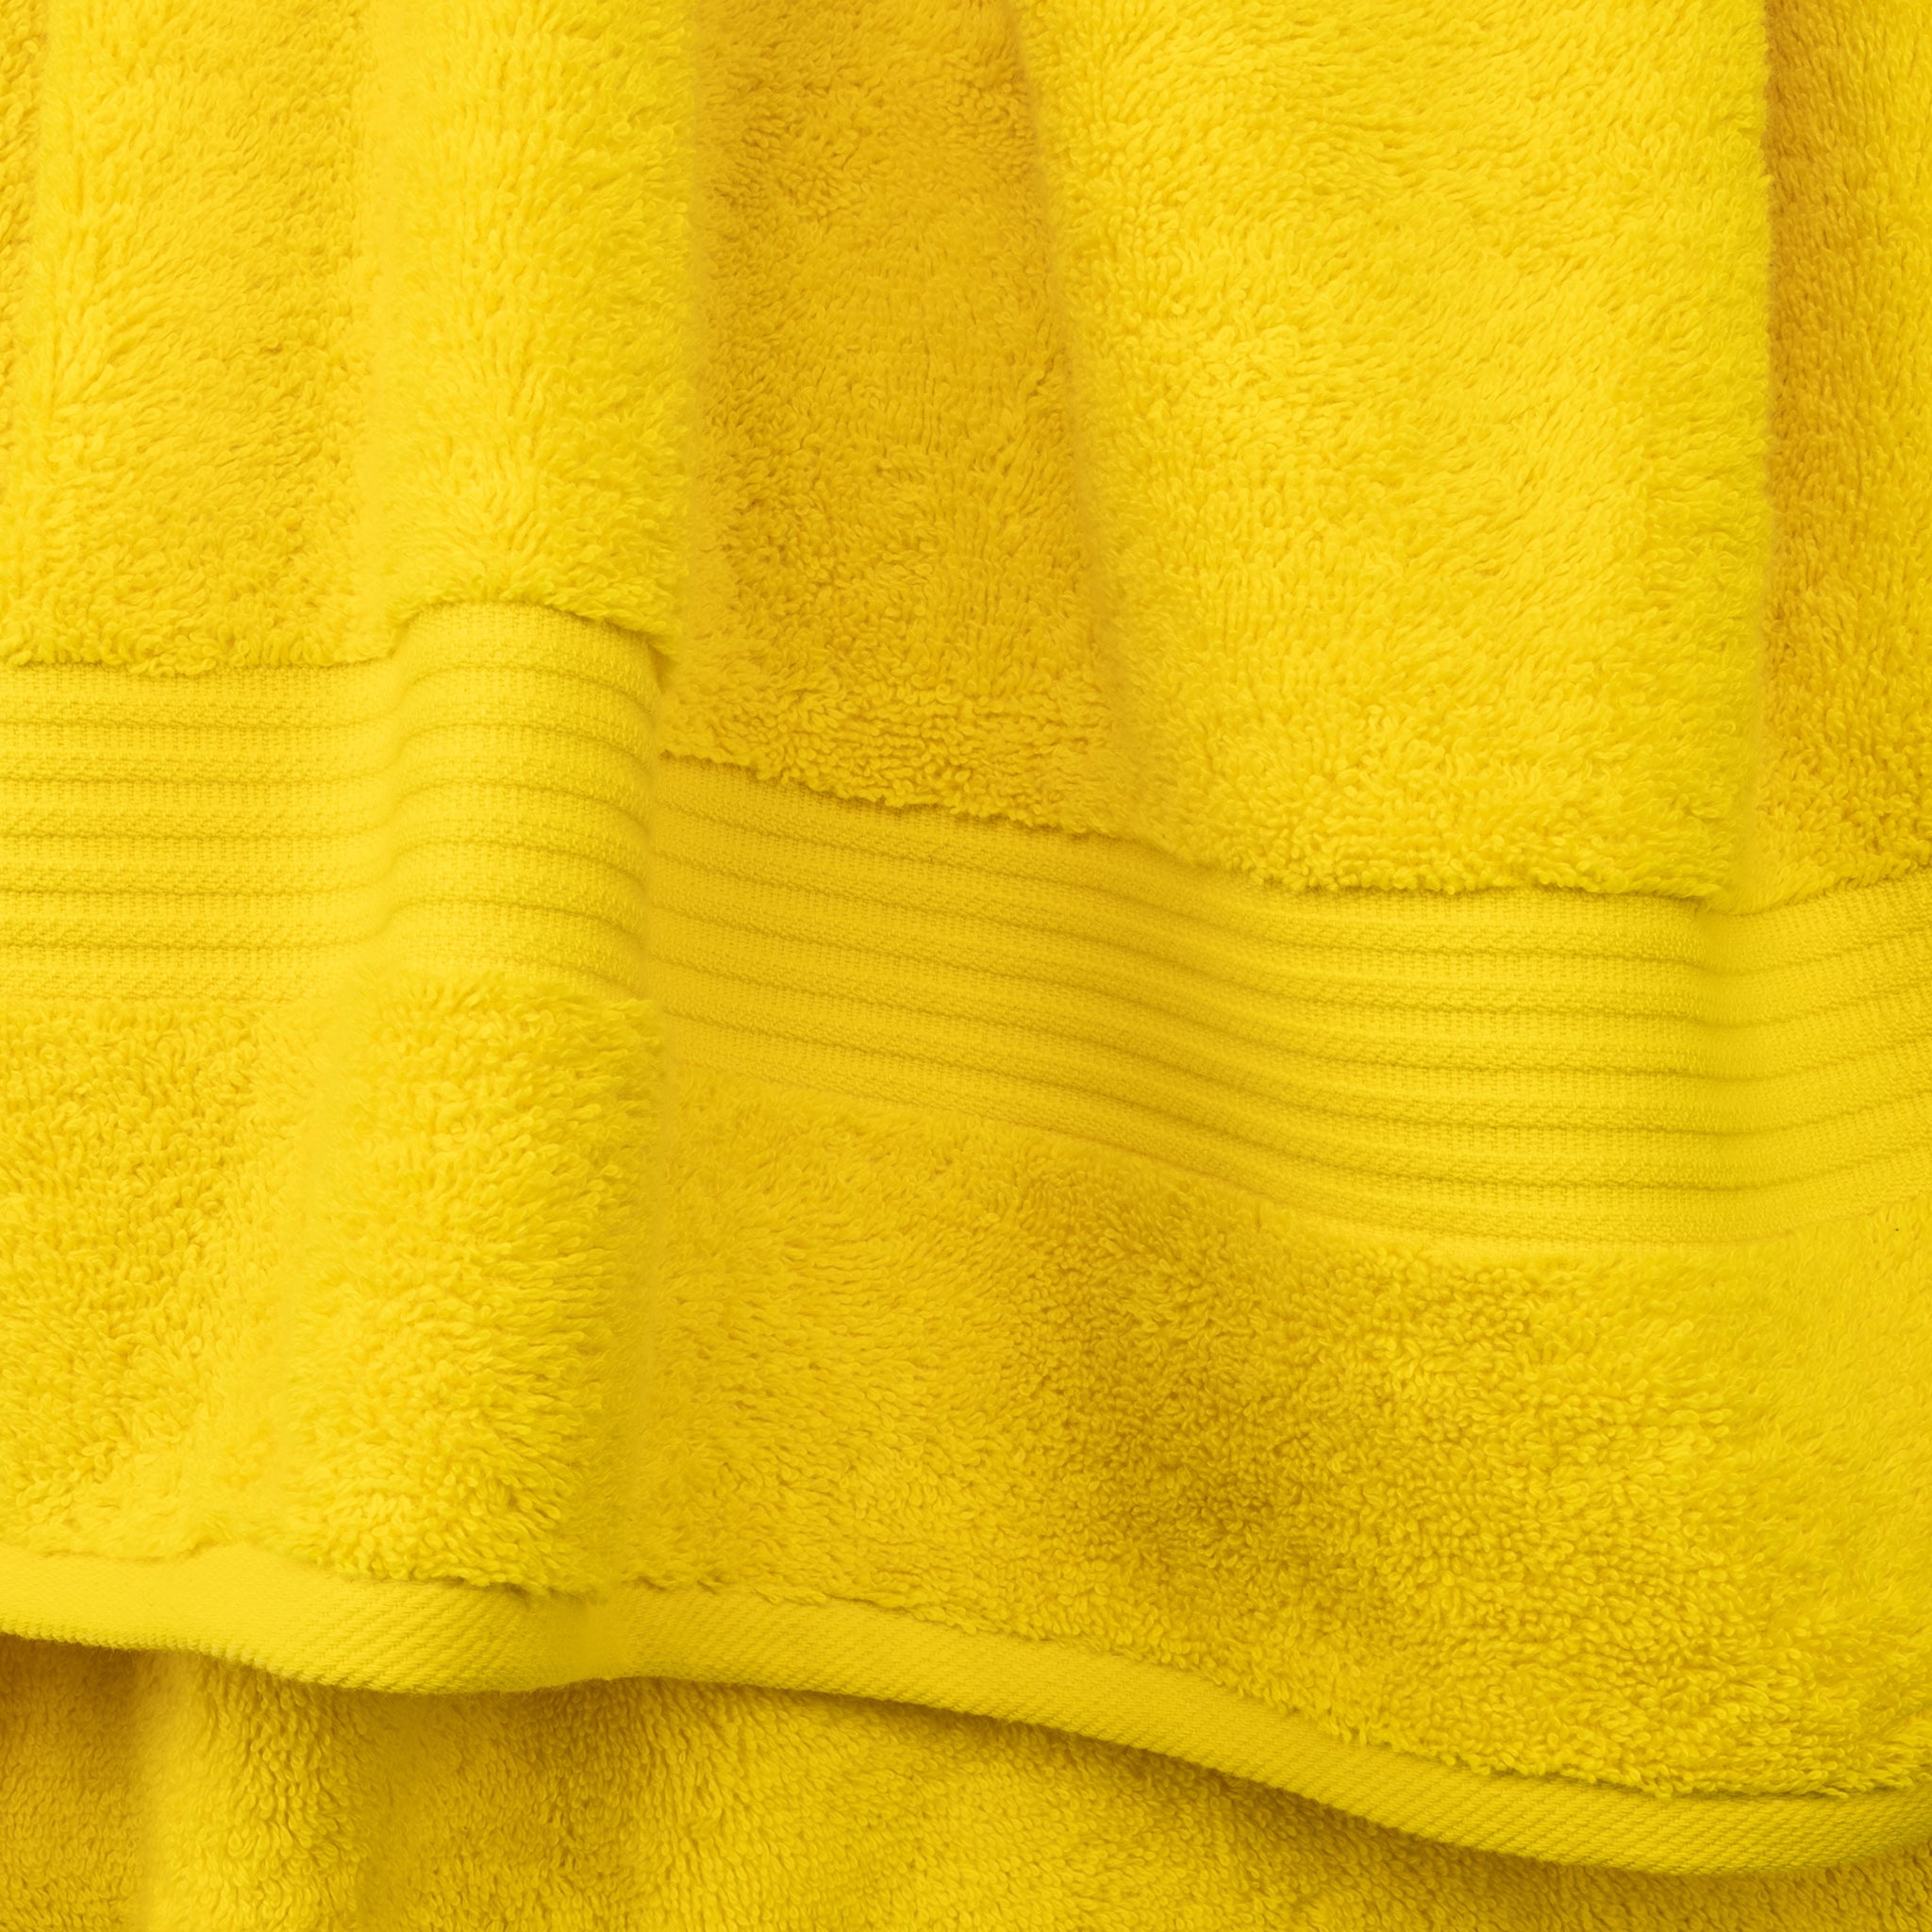 American Soft Linen Bekos 100% Cotton Turkish Towels, 4 Piece Bath Towel Set -turquoise-yellow-03